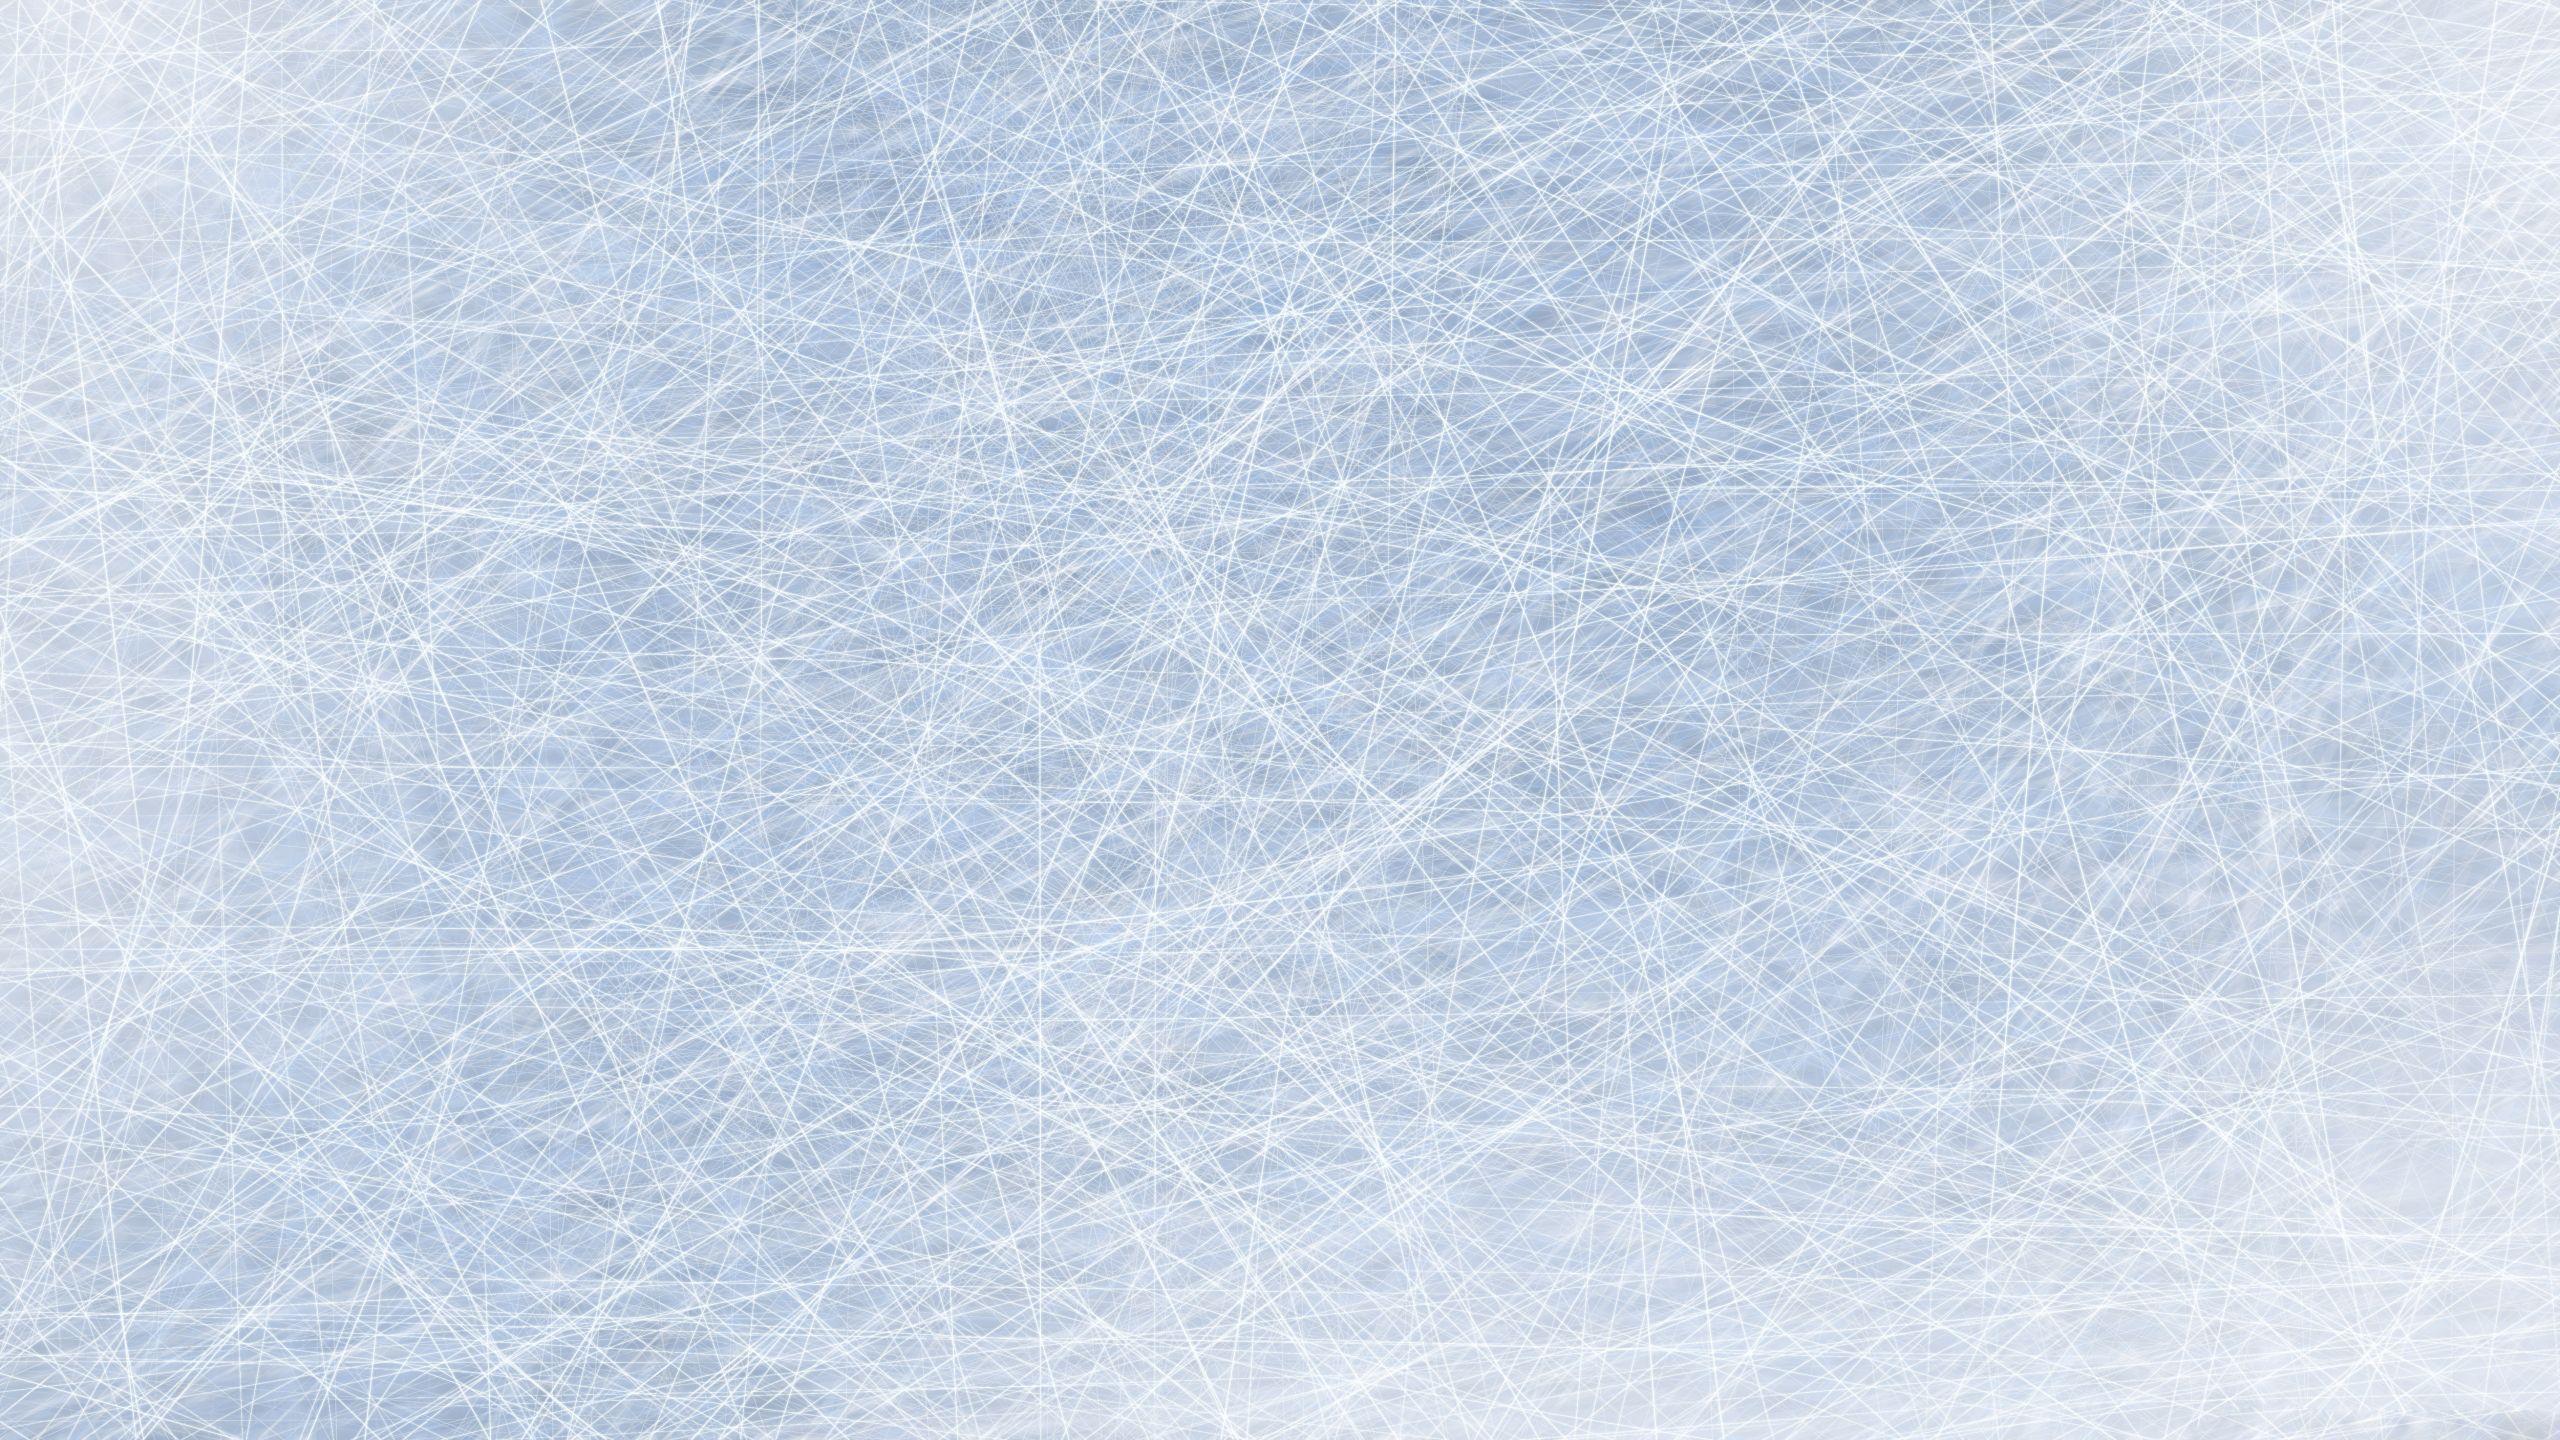 Wallpaper.wiki Hockey Ice Wallpaper Hd PIC WPE003688